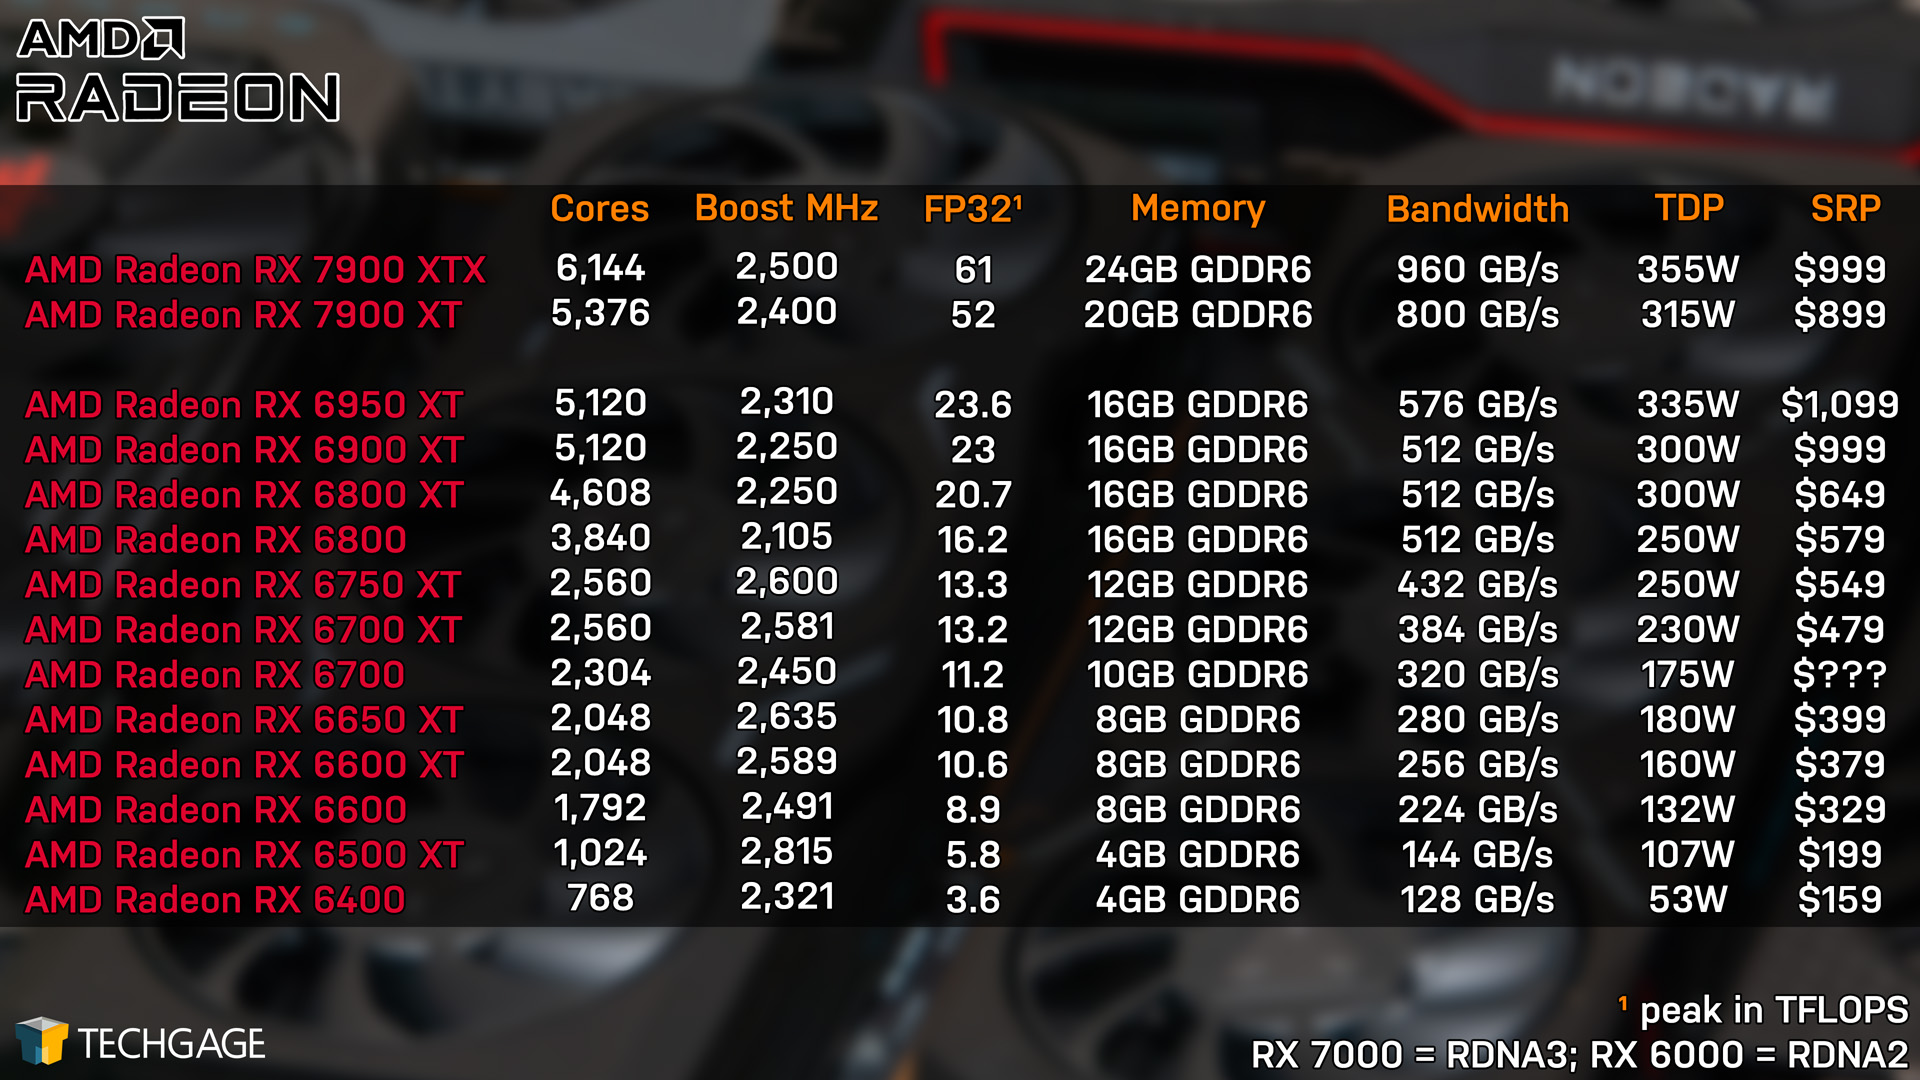 AMD Radeon Lineup (as of RX 7900 XTX Launch)